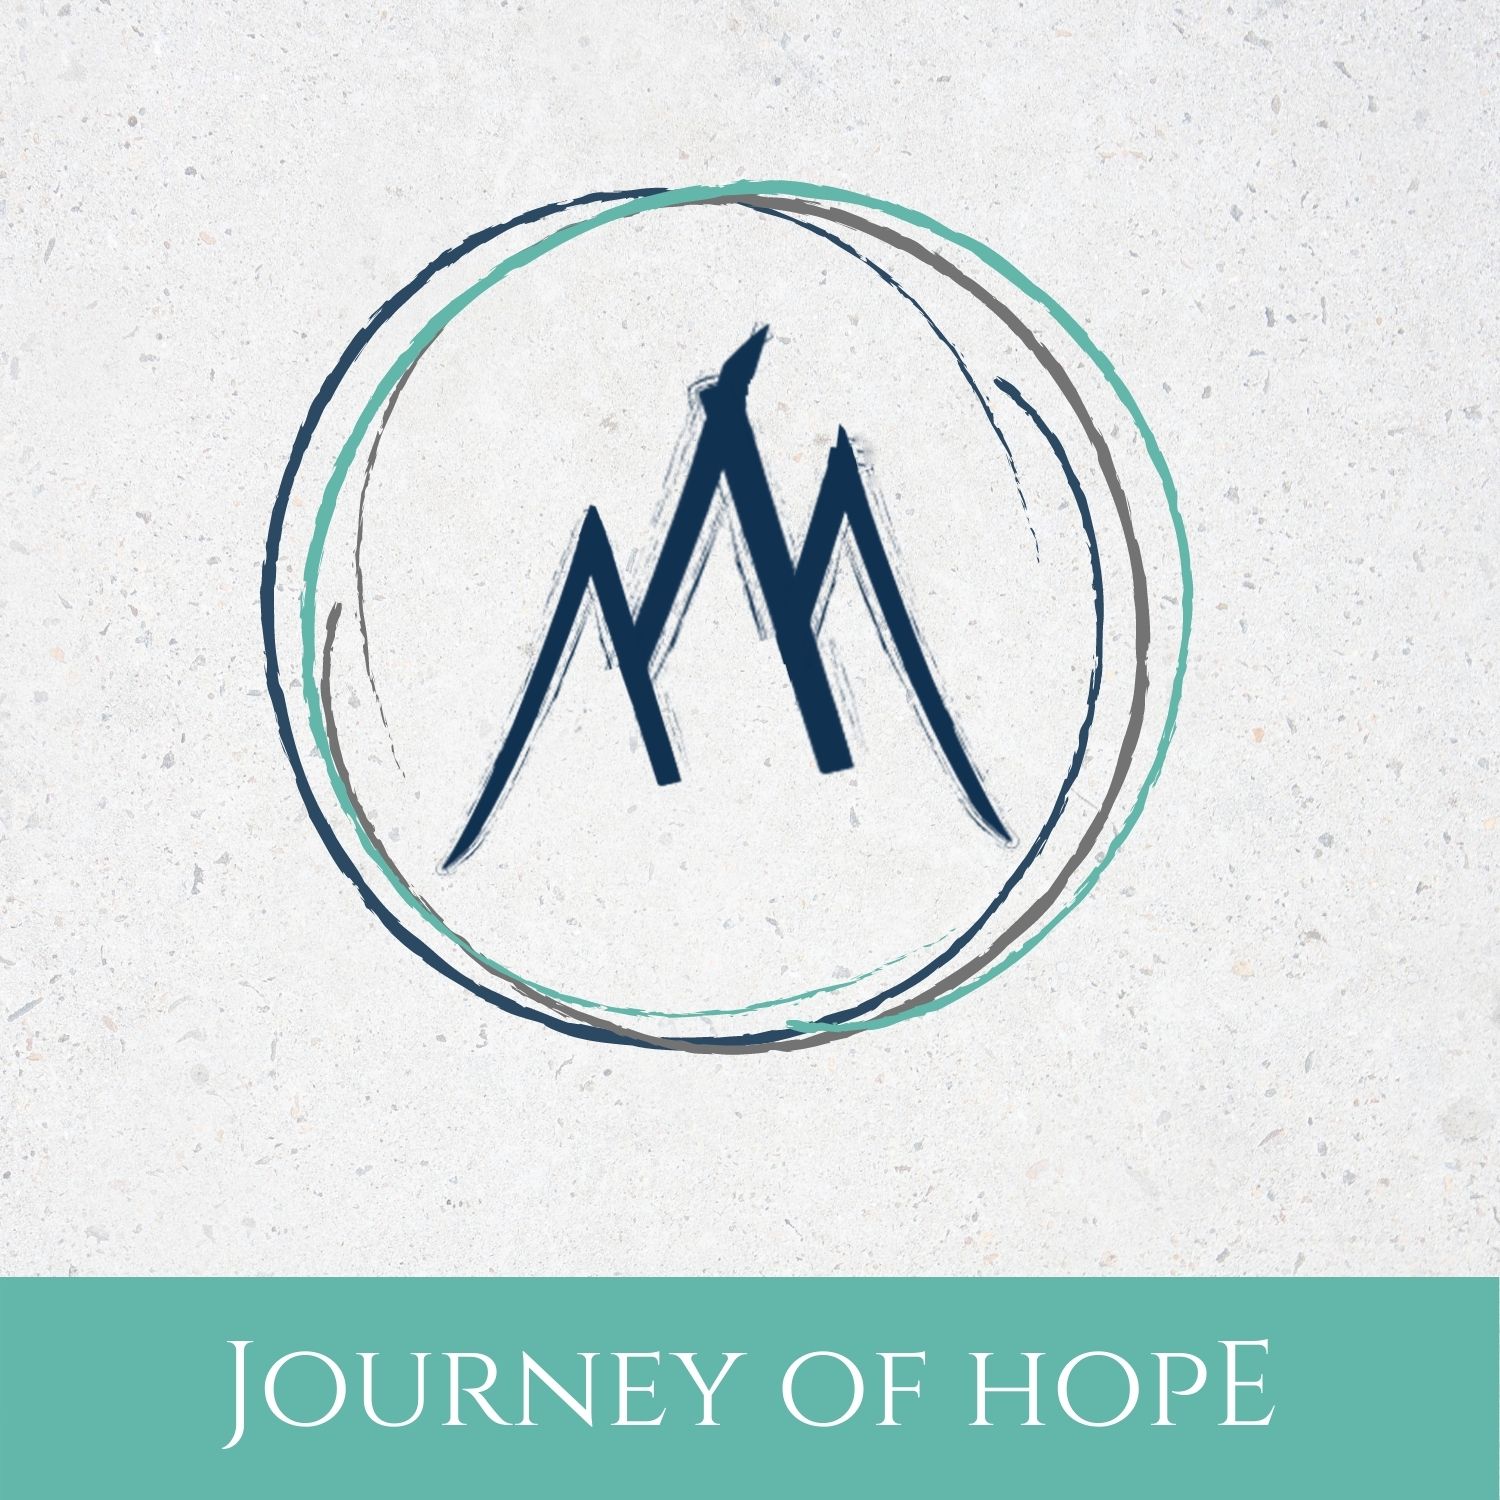 Journey of Hope UMC's Weekly Sermons